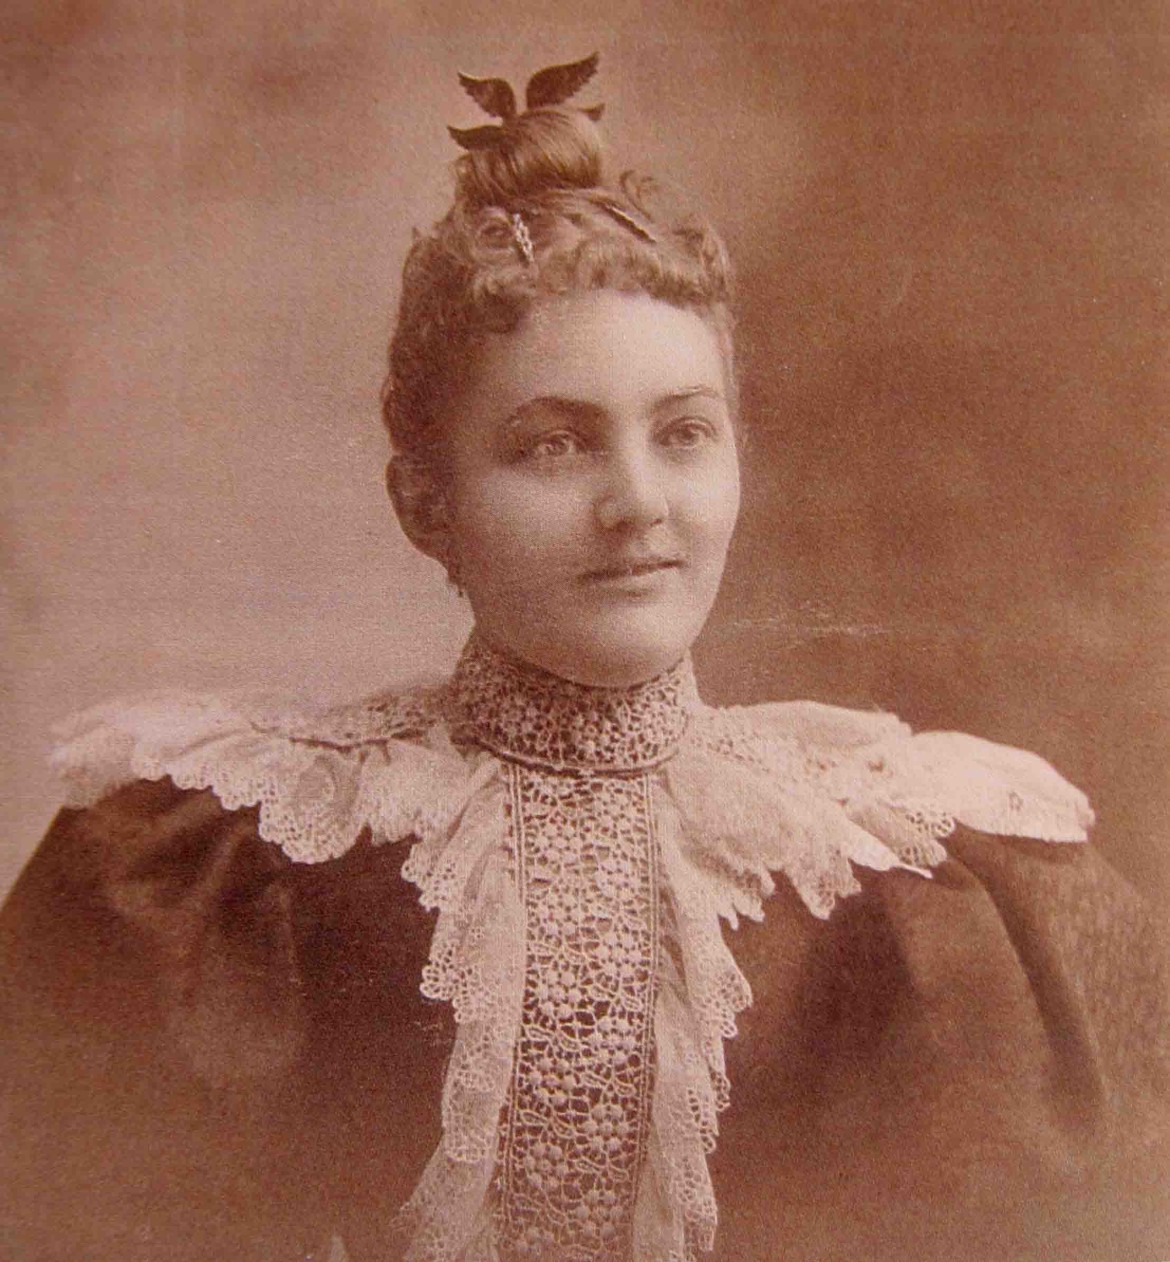 A vintage photo of Anna O'Brien.